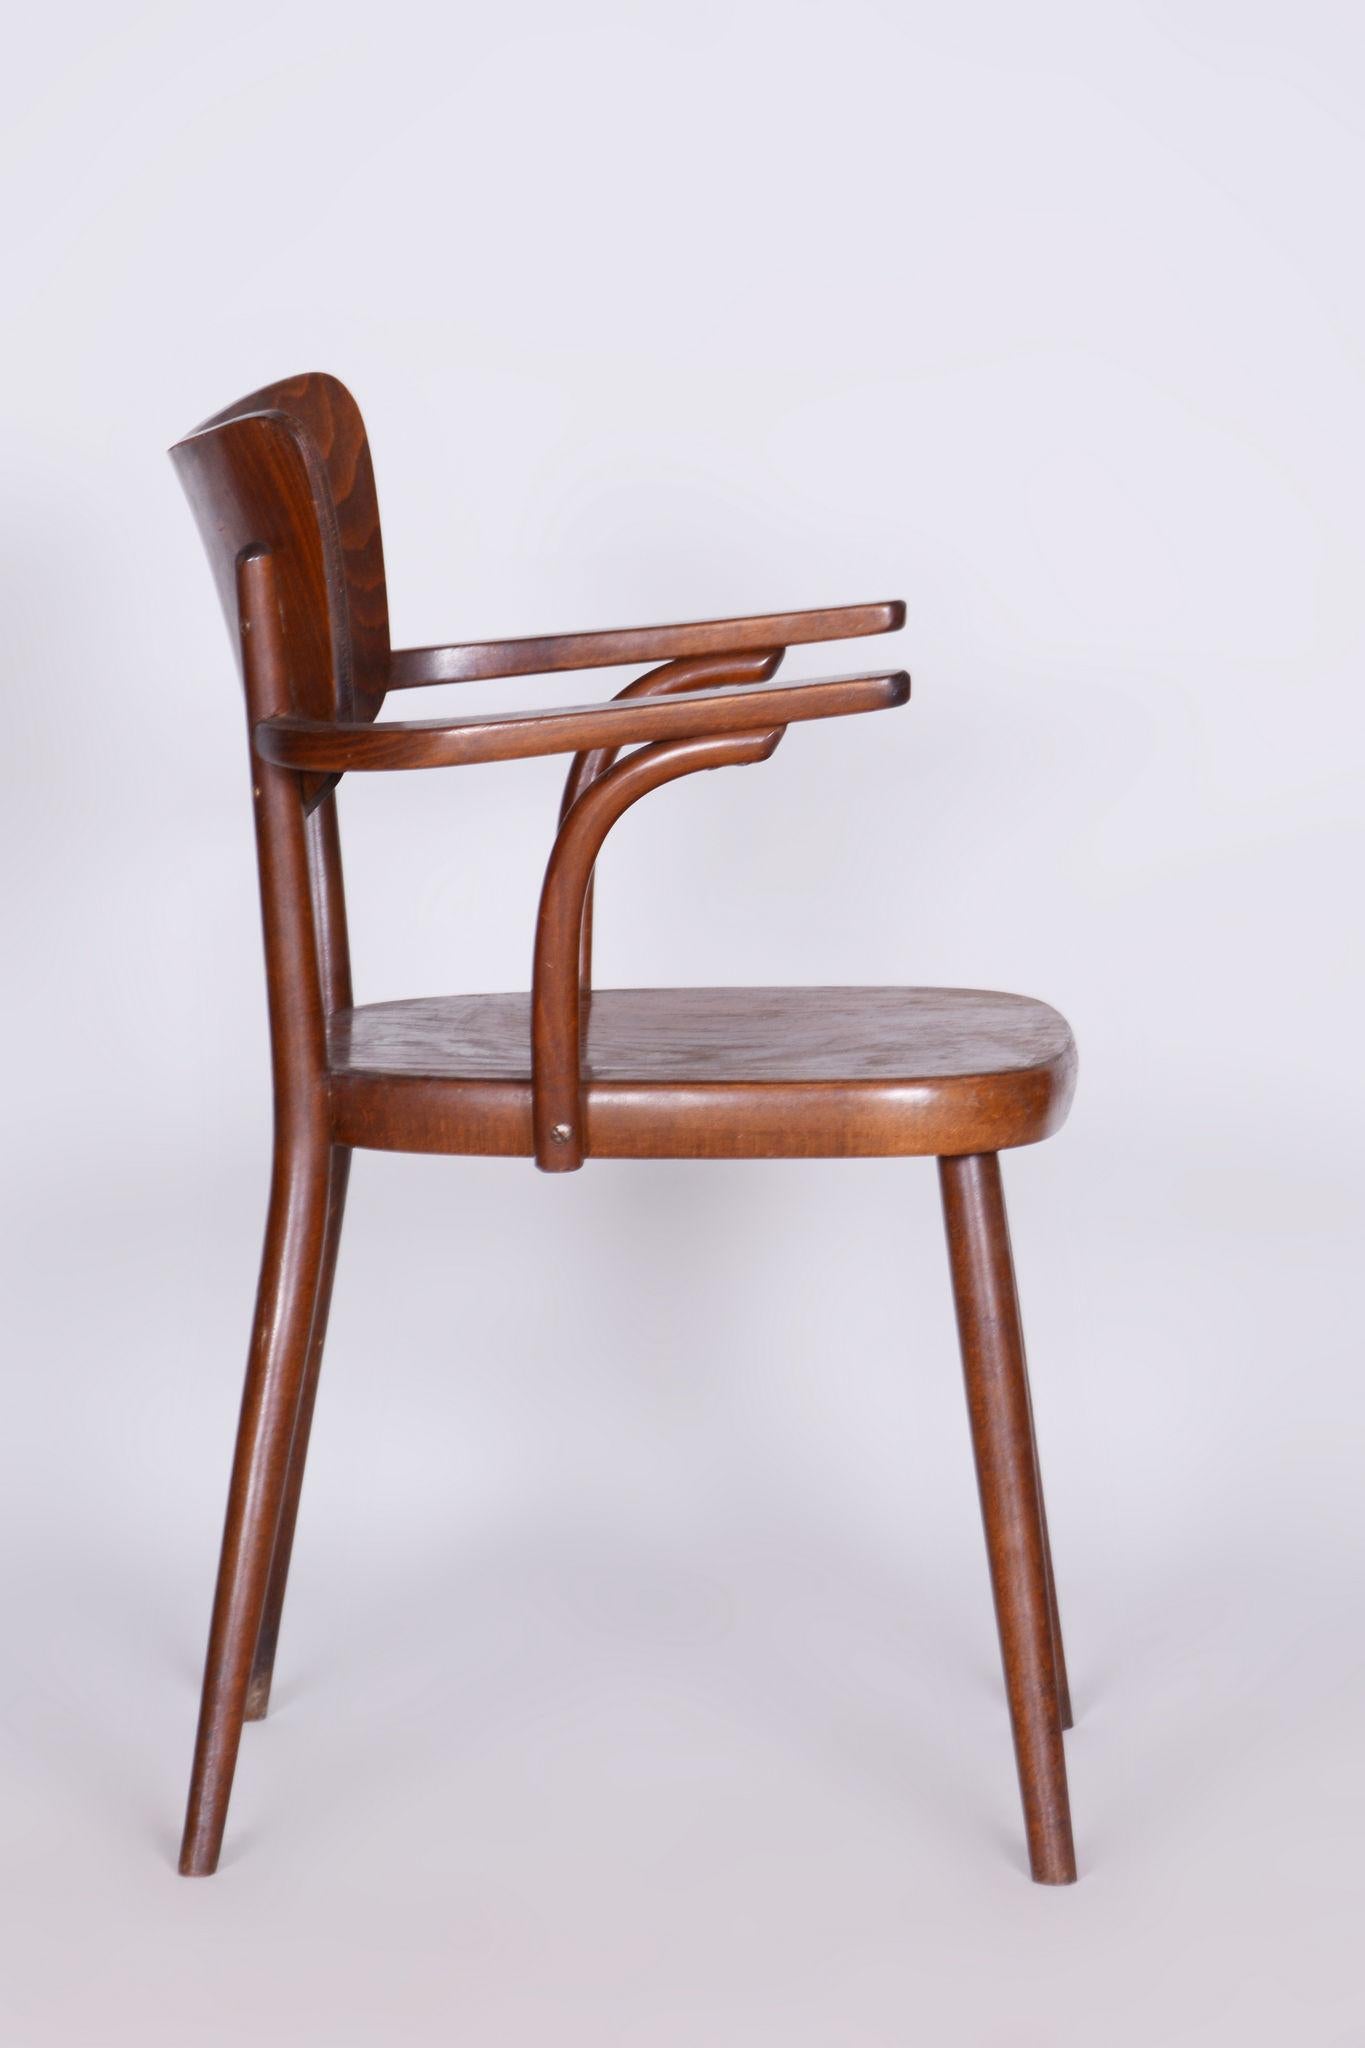 Original ArtDeco Beech Chair with Armrests by Ton, R. Hofman, Czechia, 1940s For Sale 1